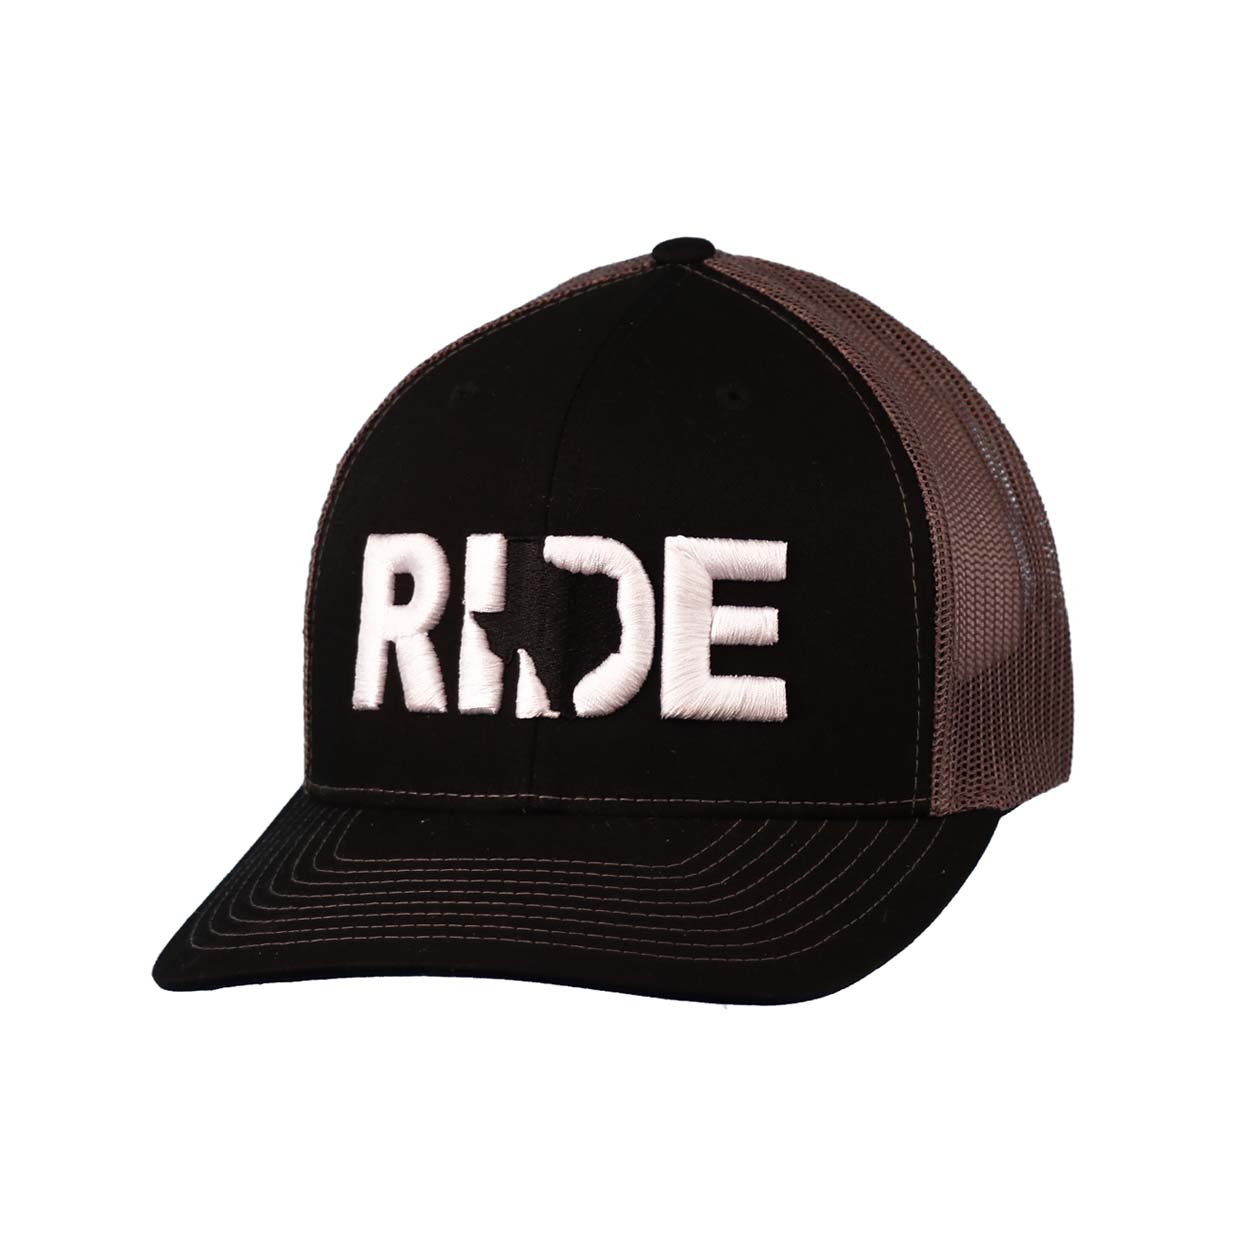 Ride Texas Classic Embroidered Snapback Trucker Hat Black/Dark Gray